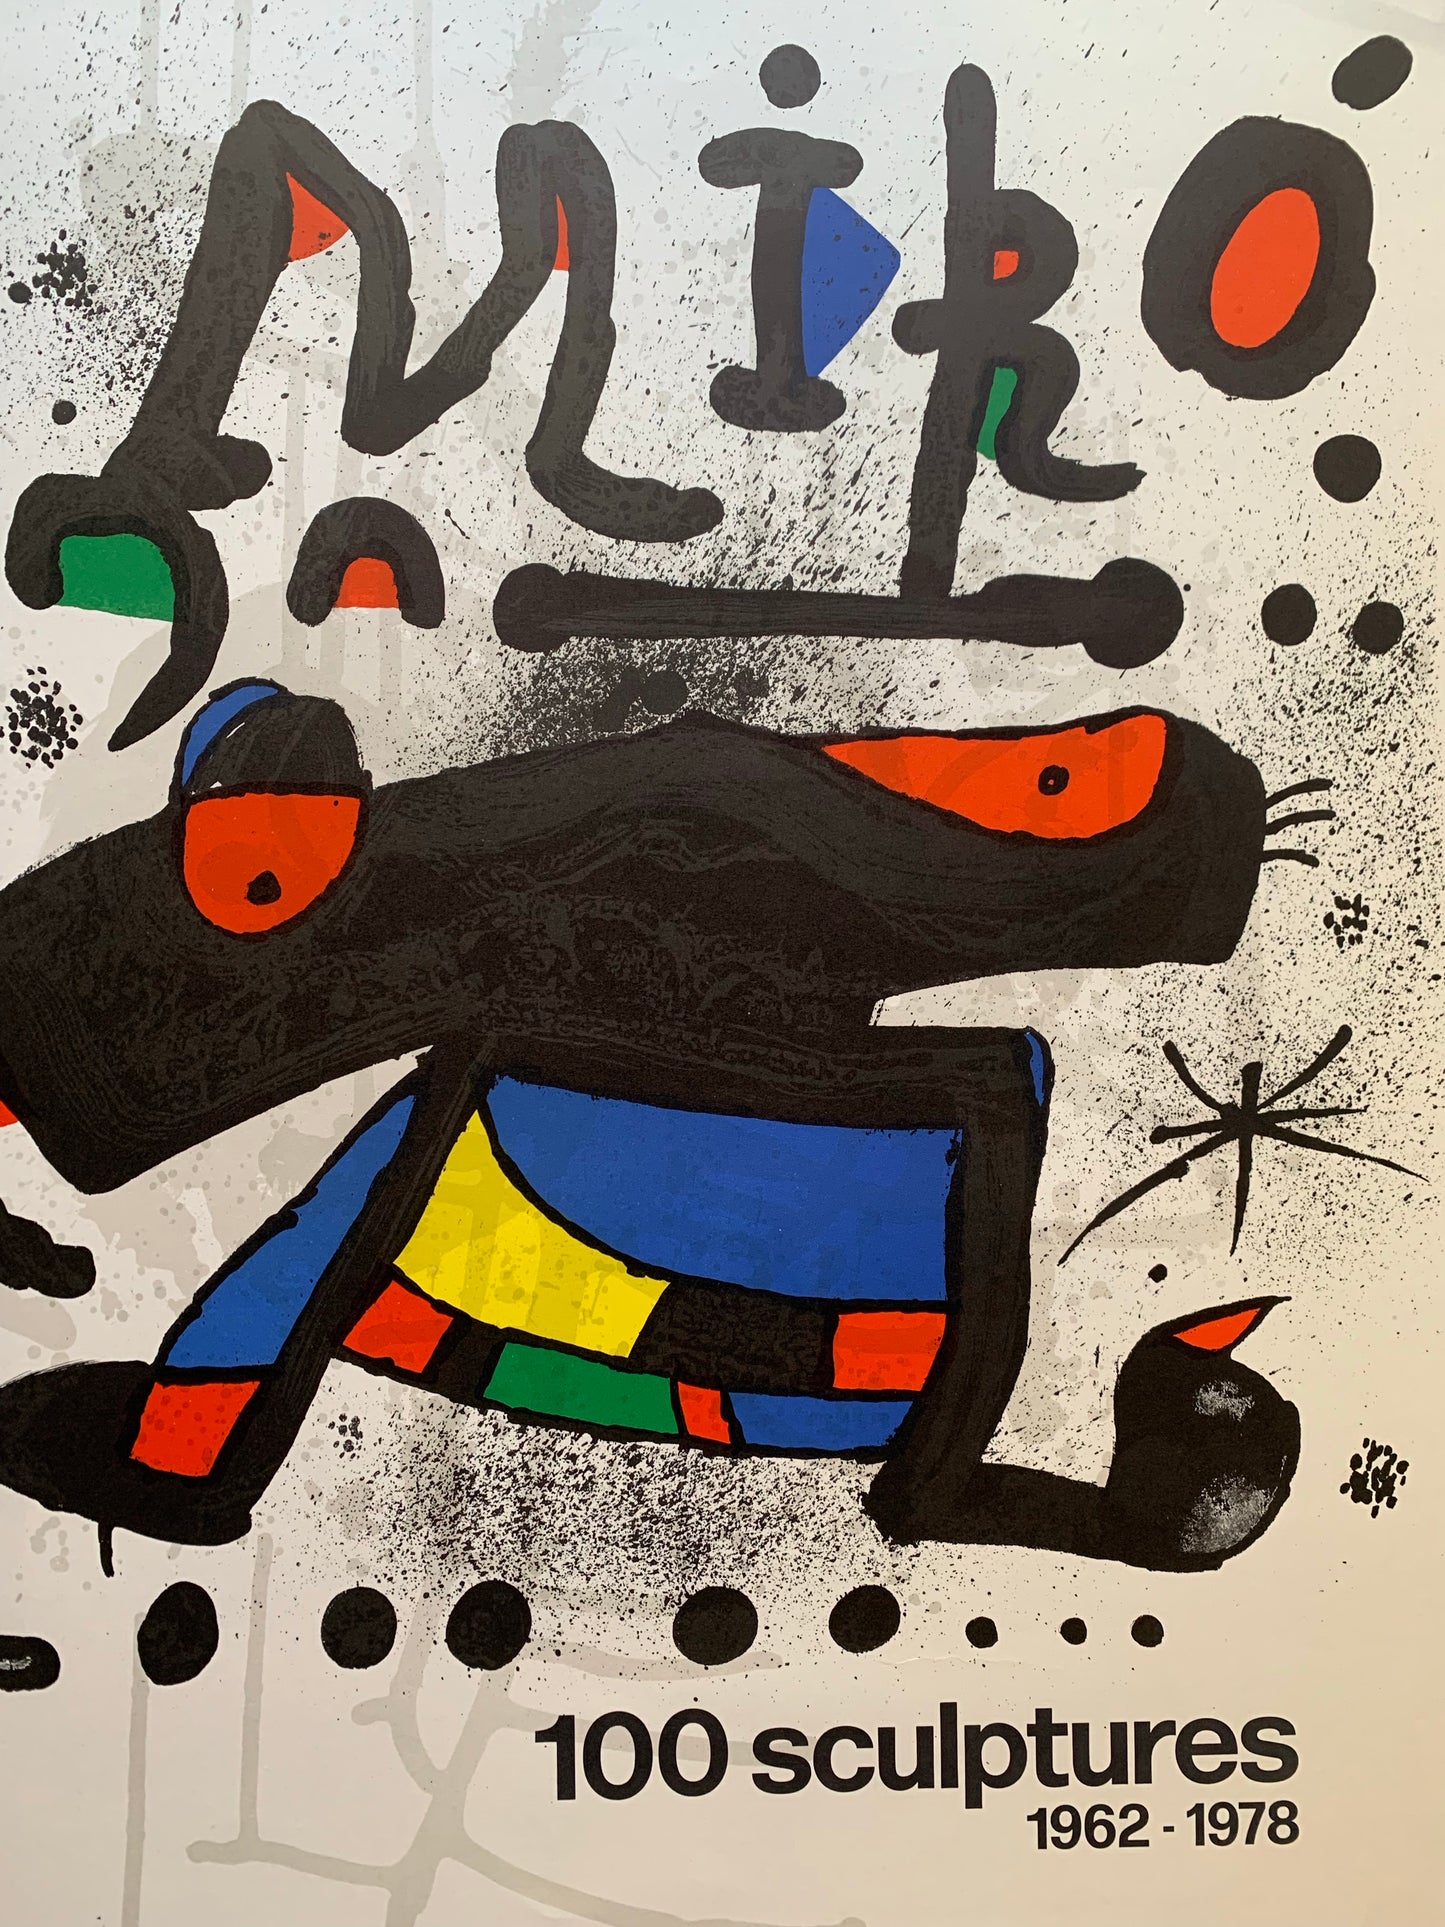 Joan Miró. “Miró, 100 sculptures”, 1978